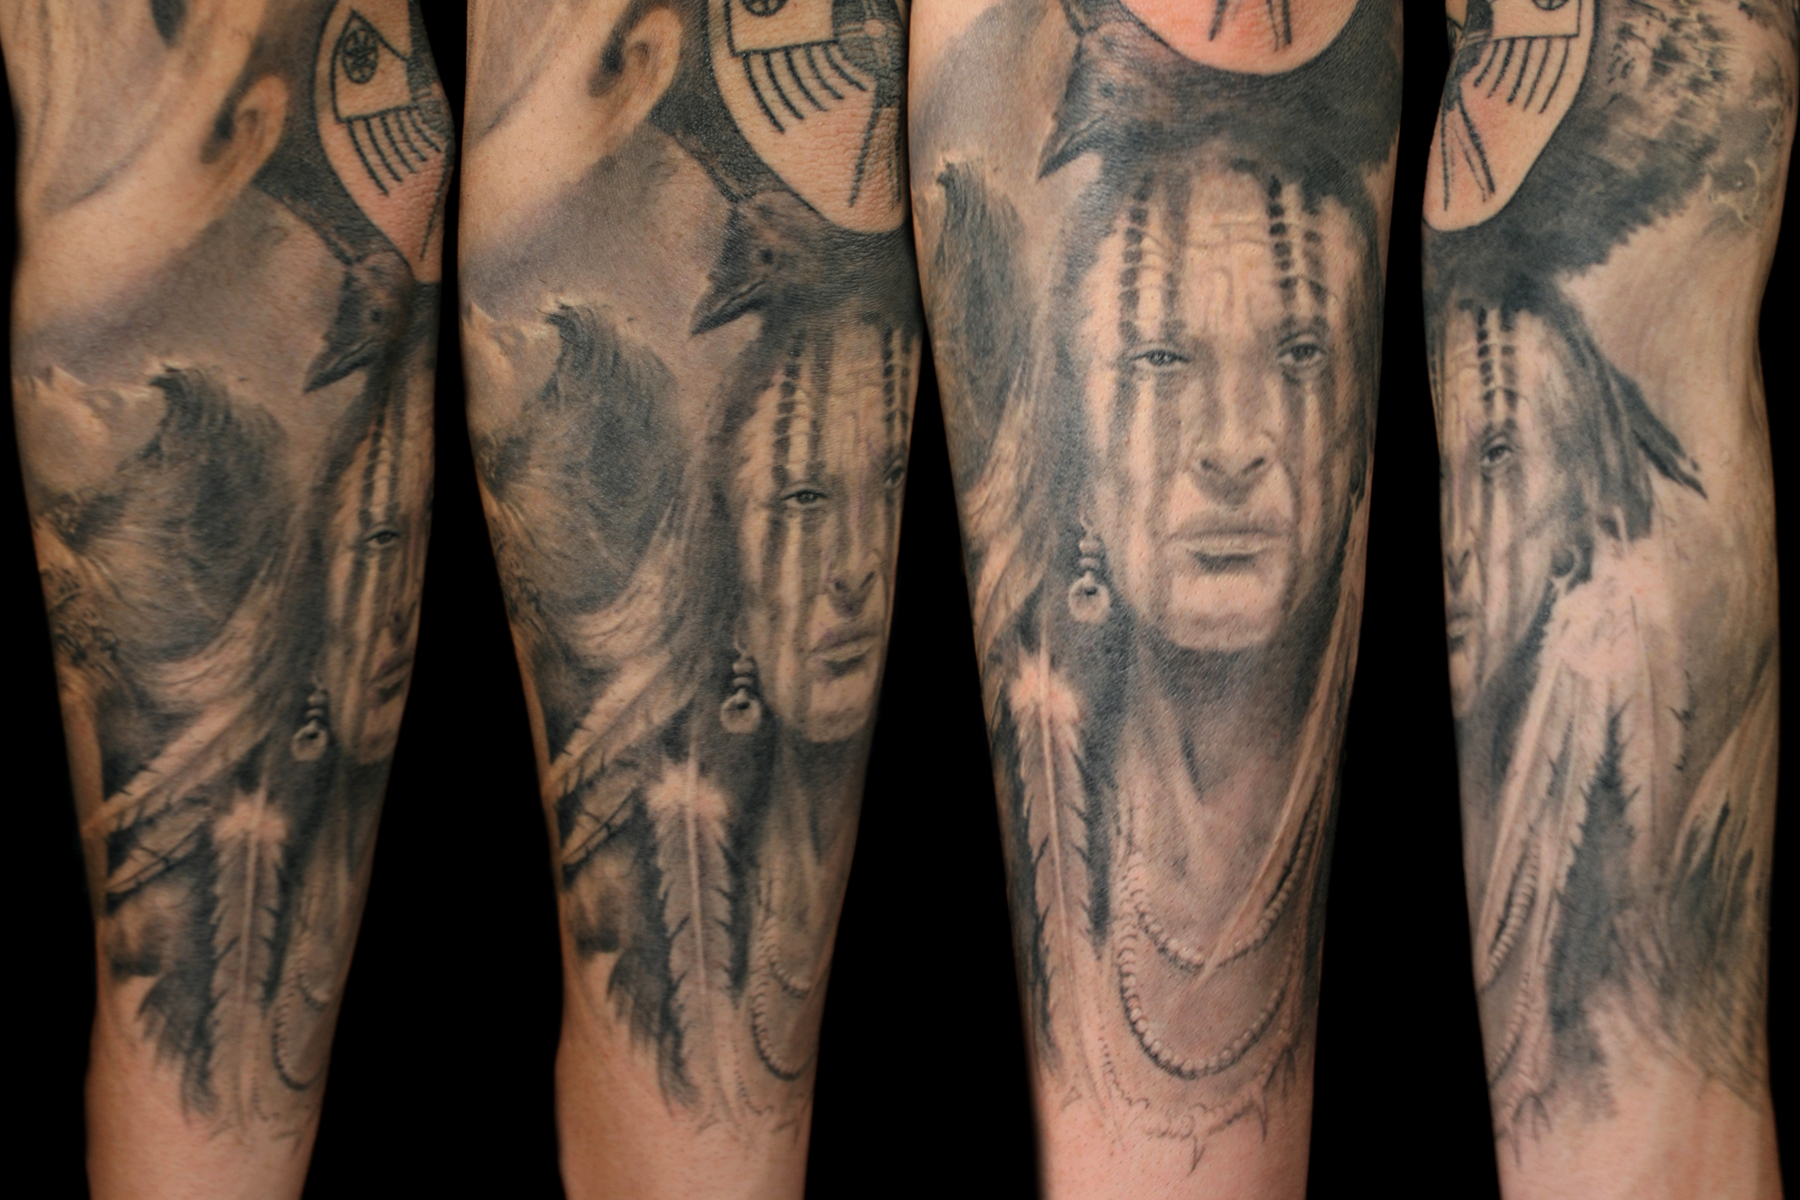 Unique & Custom Black and White Tattoos NYC | Caesar The Hun